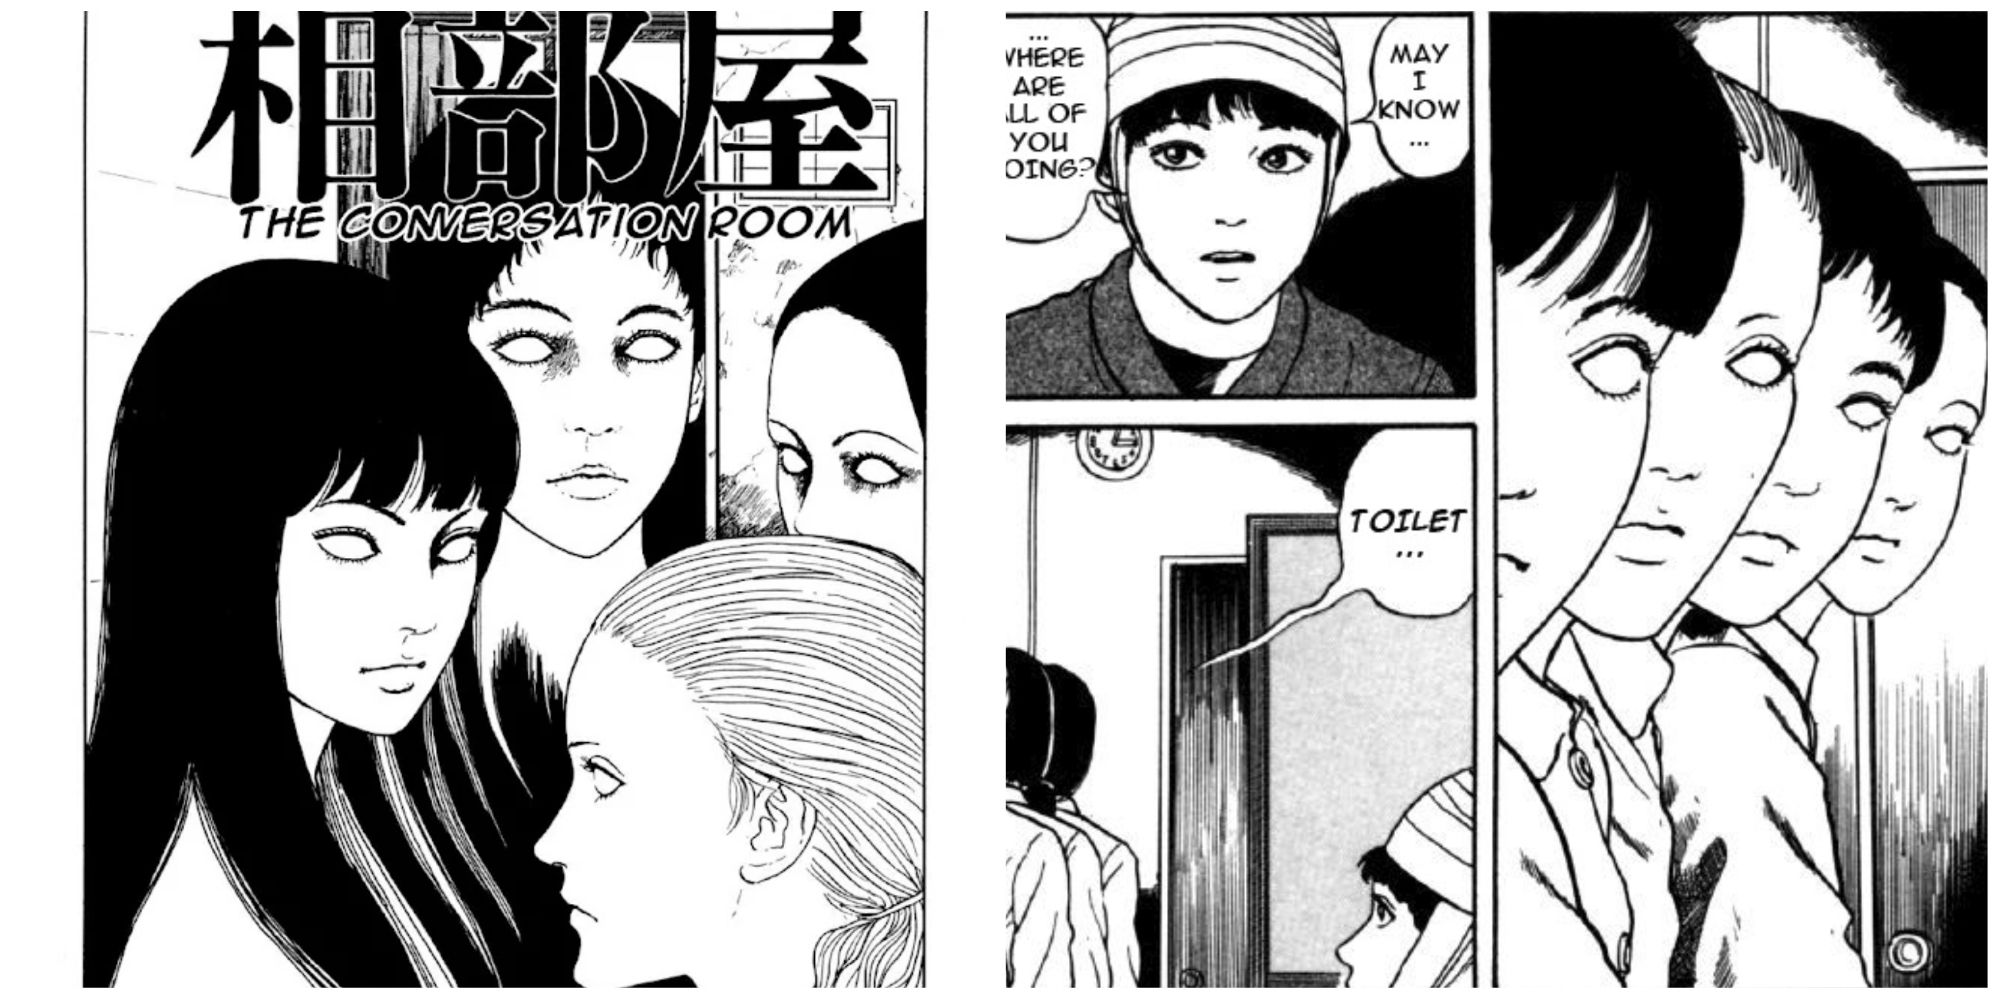 manga panels from conversation room by junji ito